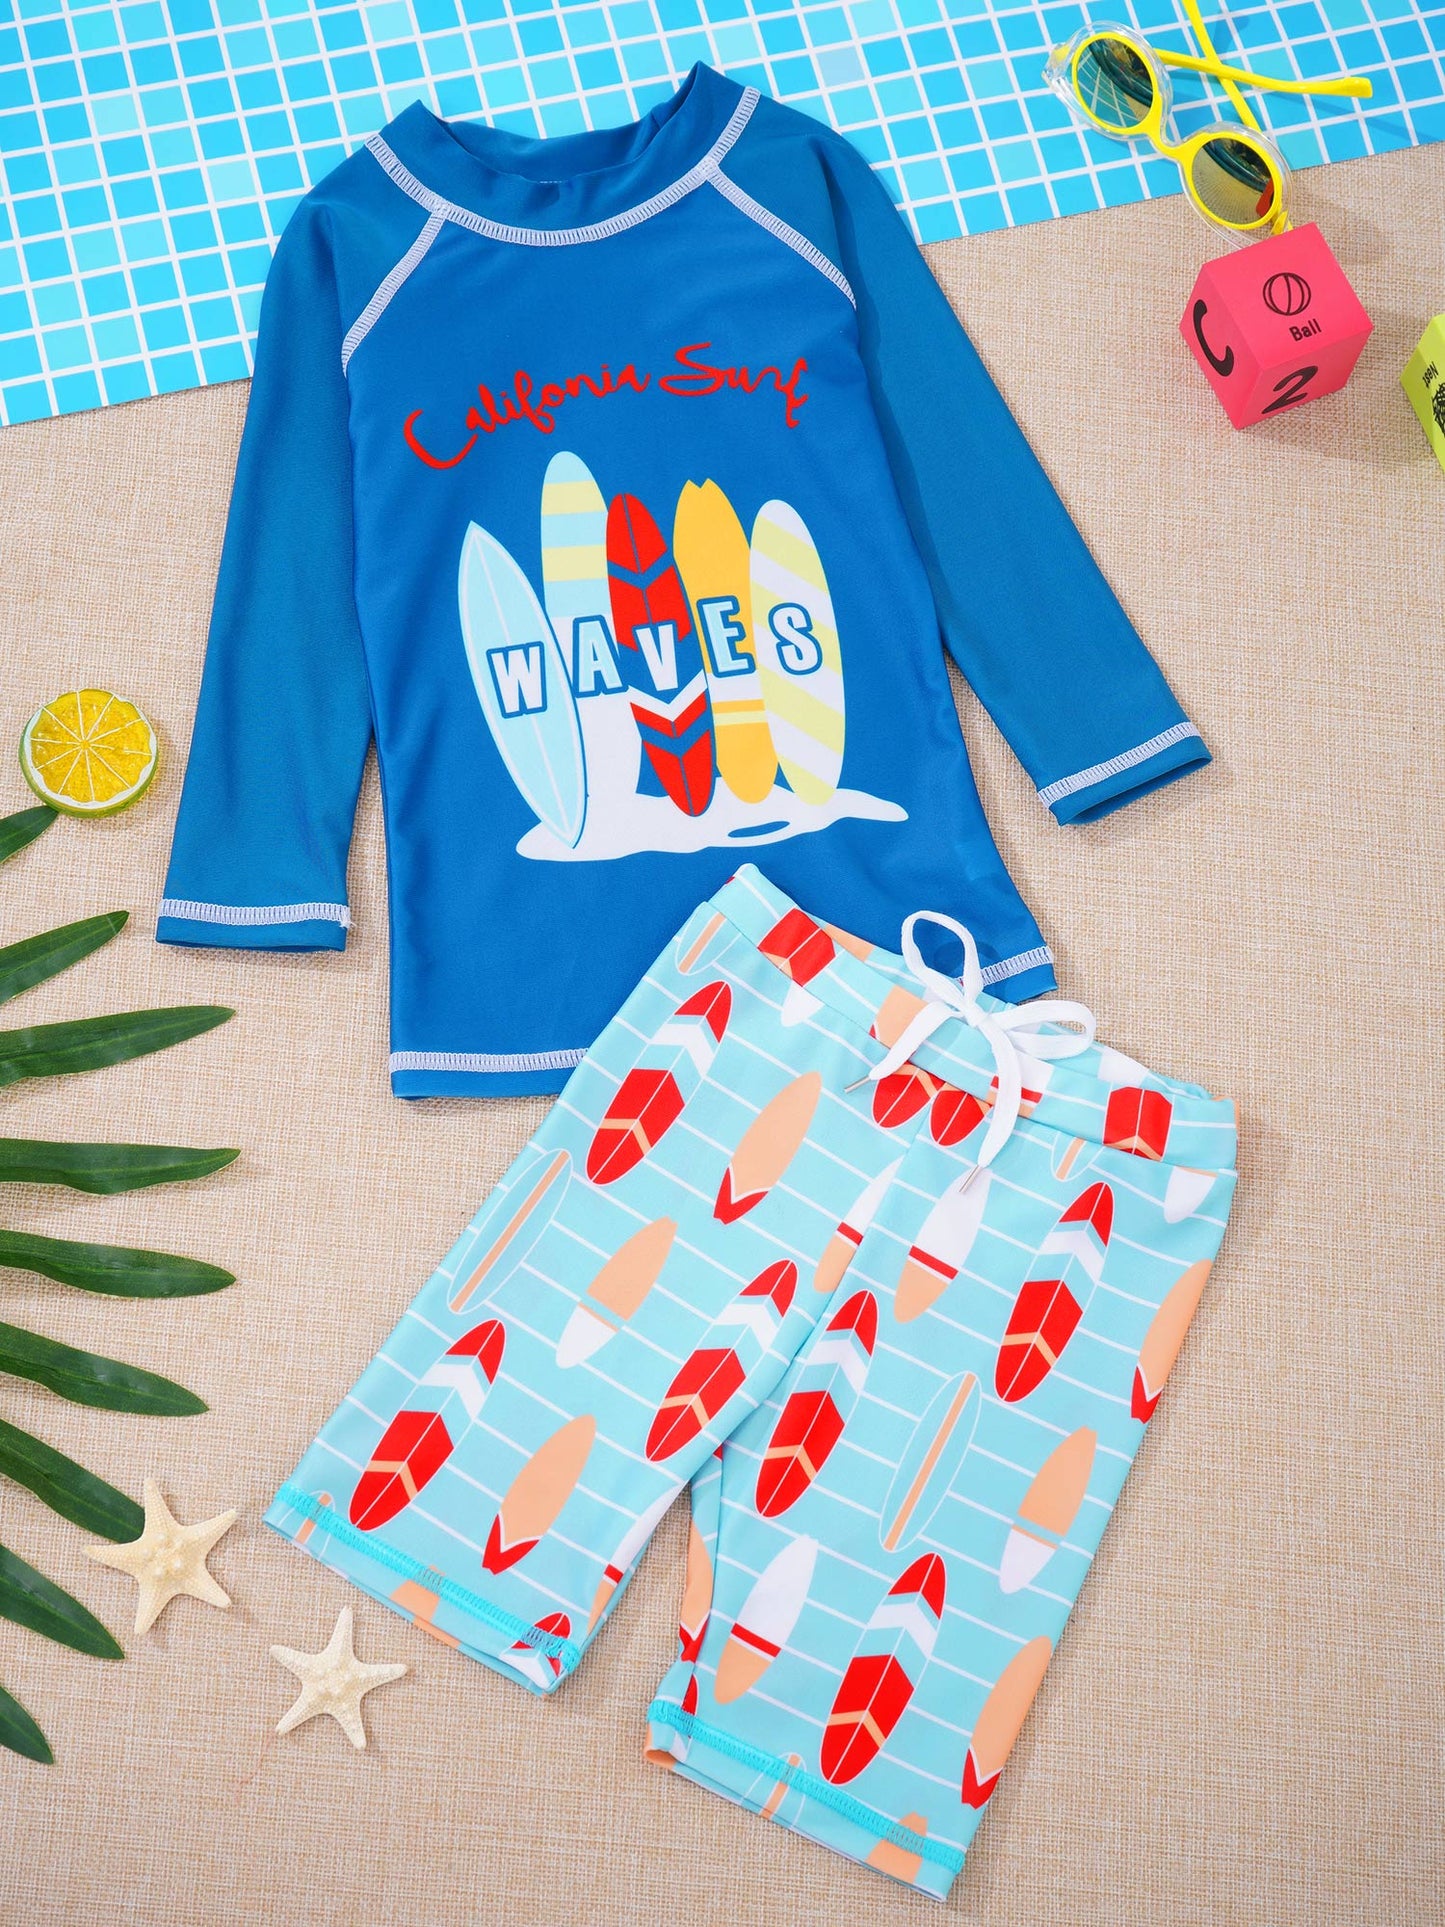 Kids Boys Summer Rashguard Swimwear Long Sleeve Tops Shorts Cartoon Print Swimming Suit